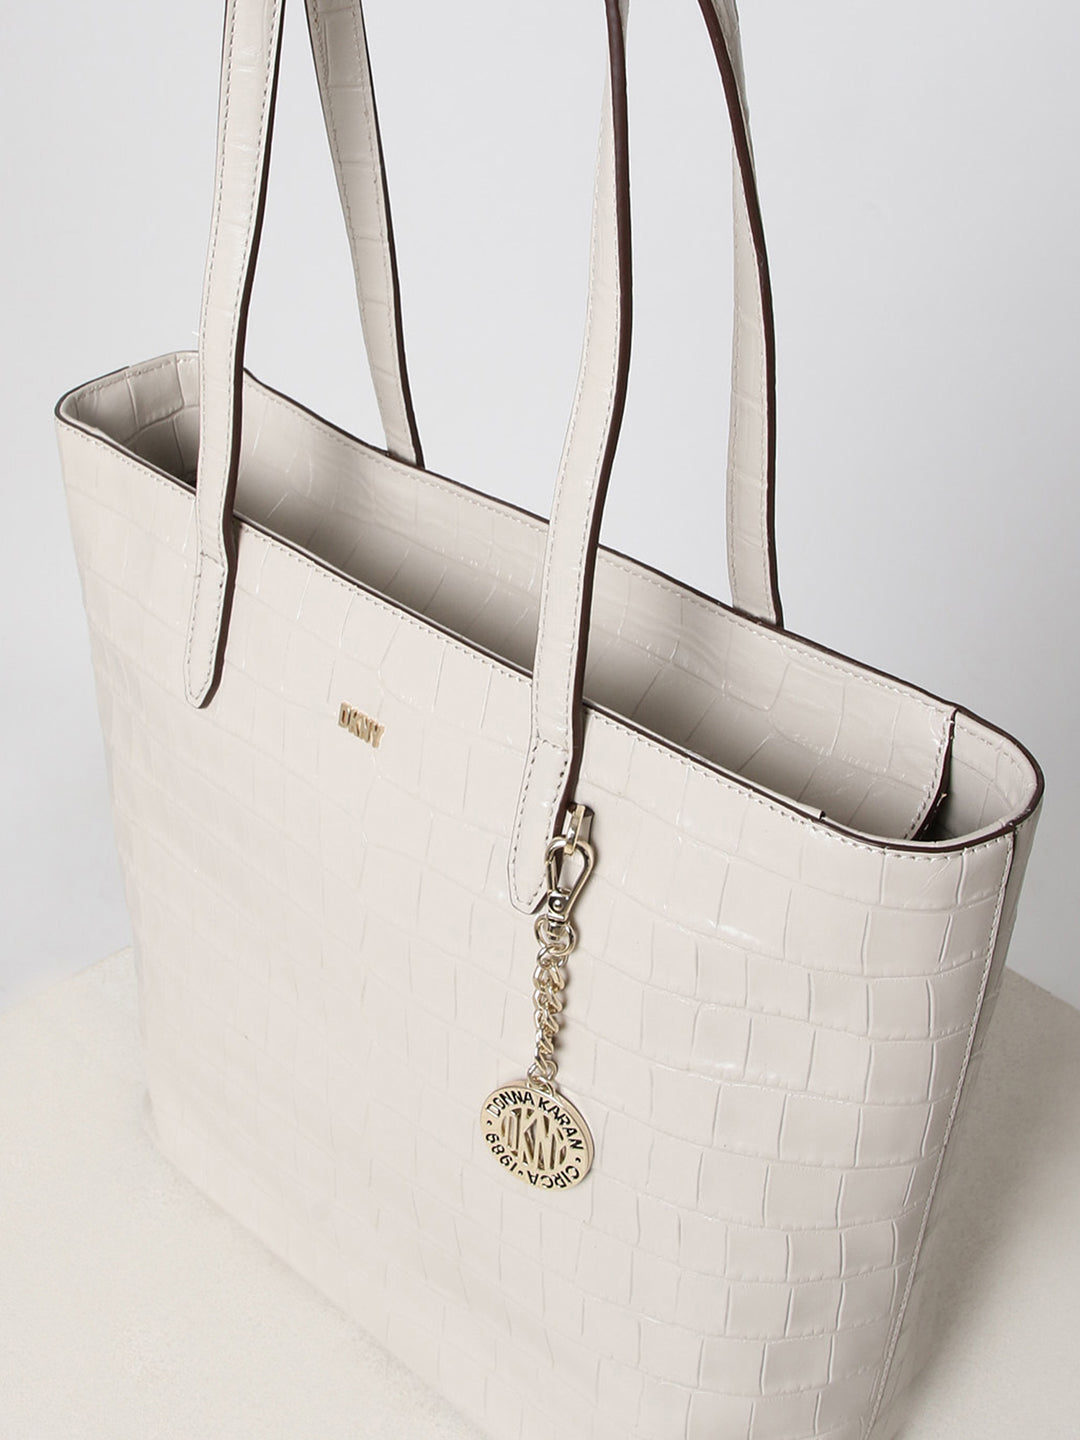 DKNY Handbags : Bags & Accessories | White - Walmart.com